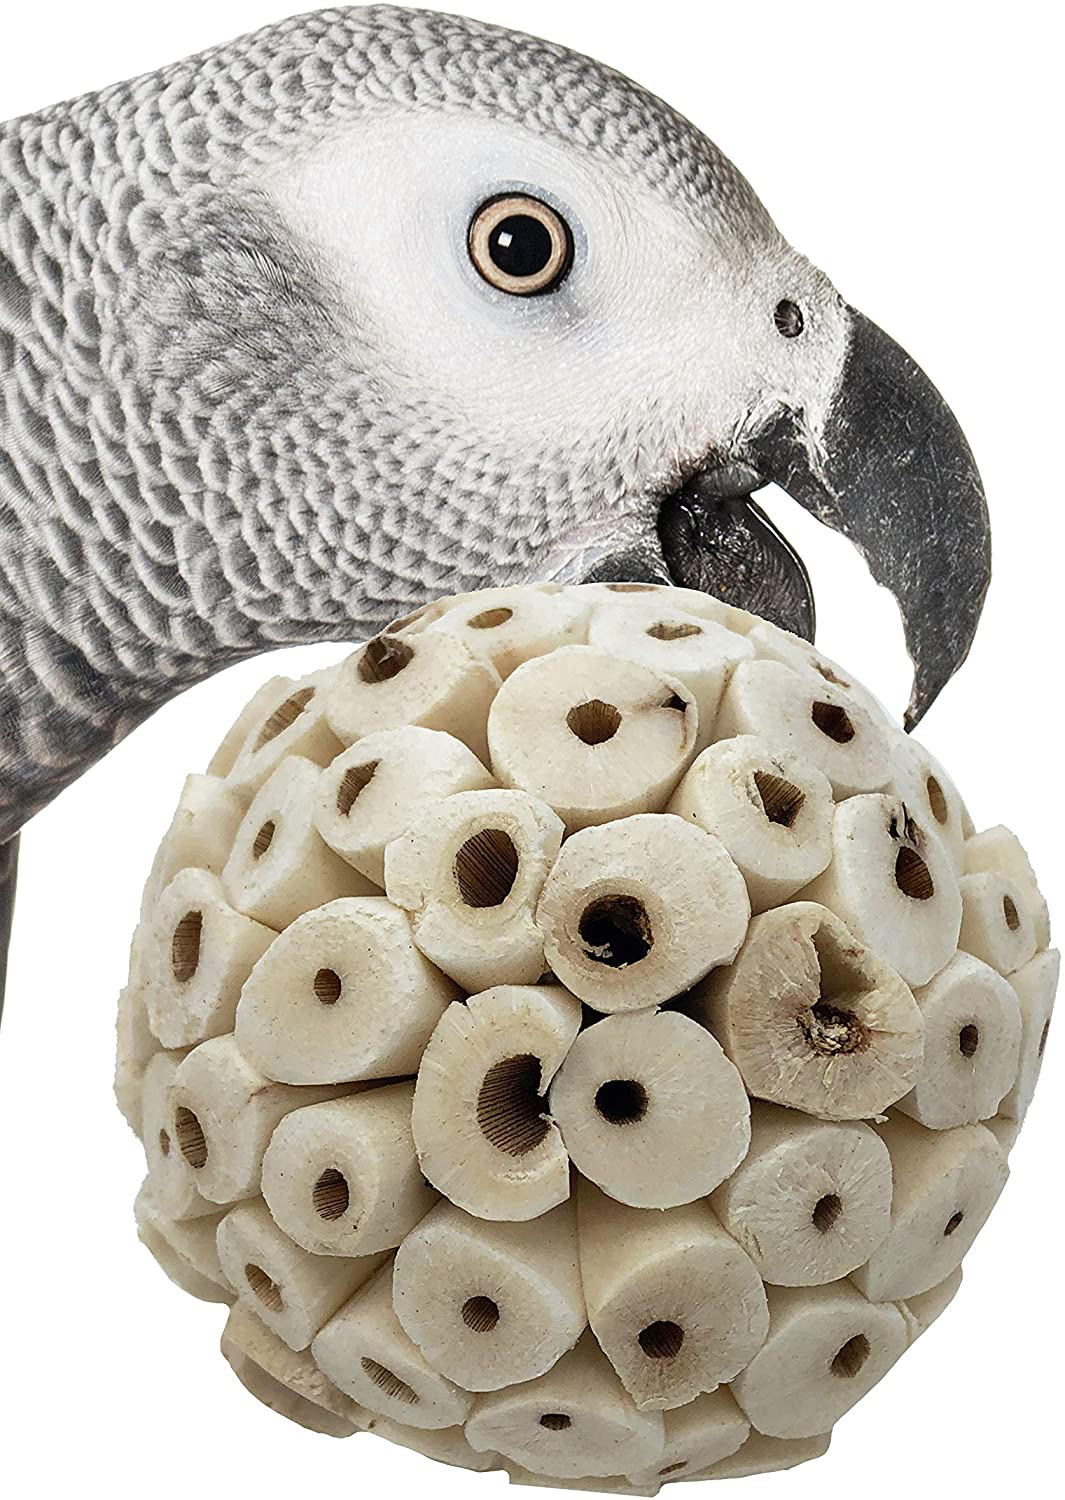 Bonka Bird Toys Natural Sola Ball Soft Chew Shred Foraging Parrot Amazon, Cockatiel, Conure, Quaker, Caique, Eclectus, Budgie, Parakeet, Rabbits, Guinea Pigs, Chinchilla, Bunny.